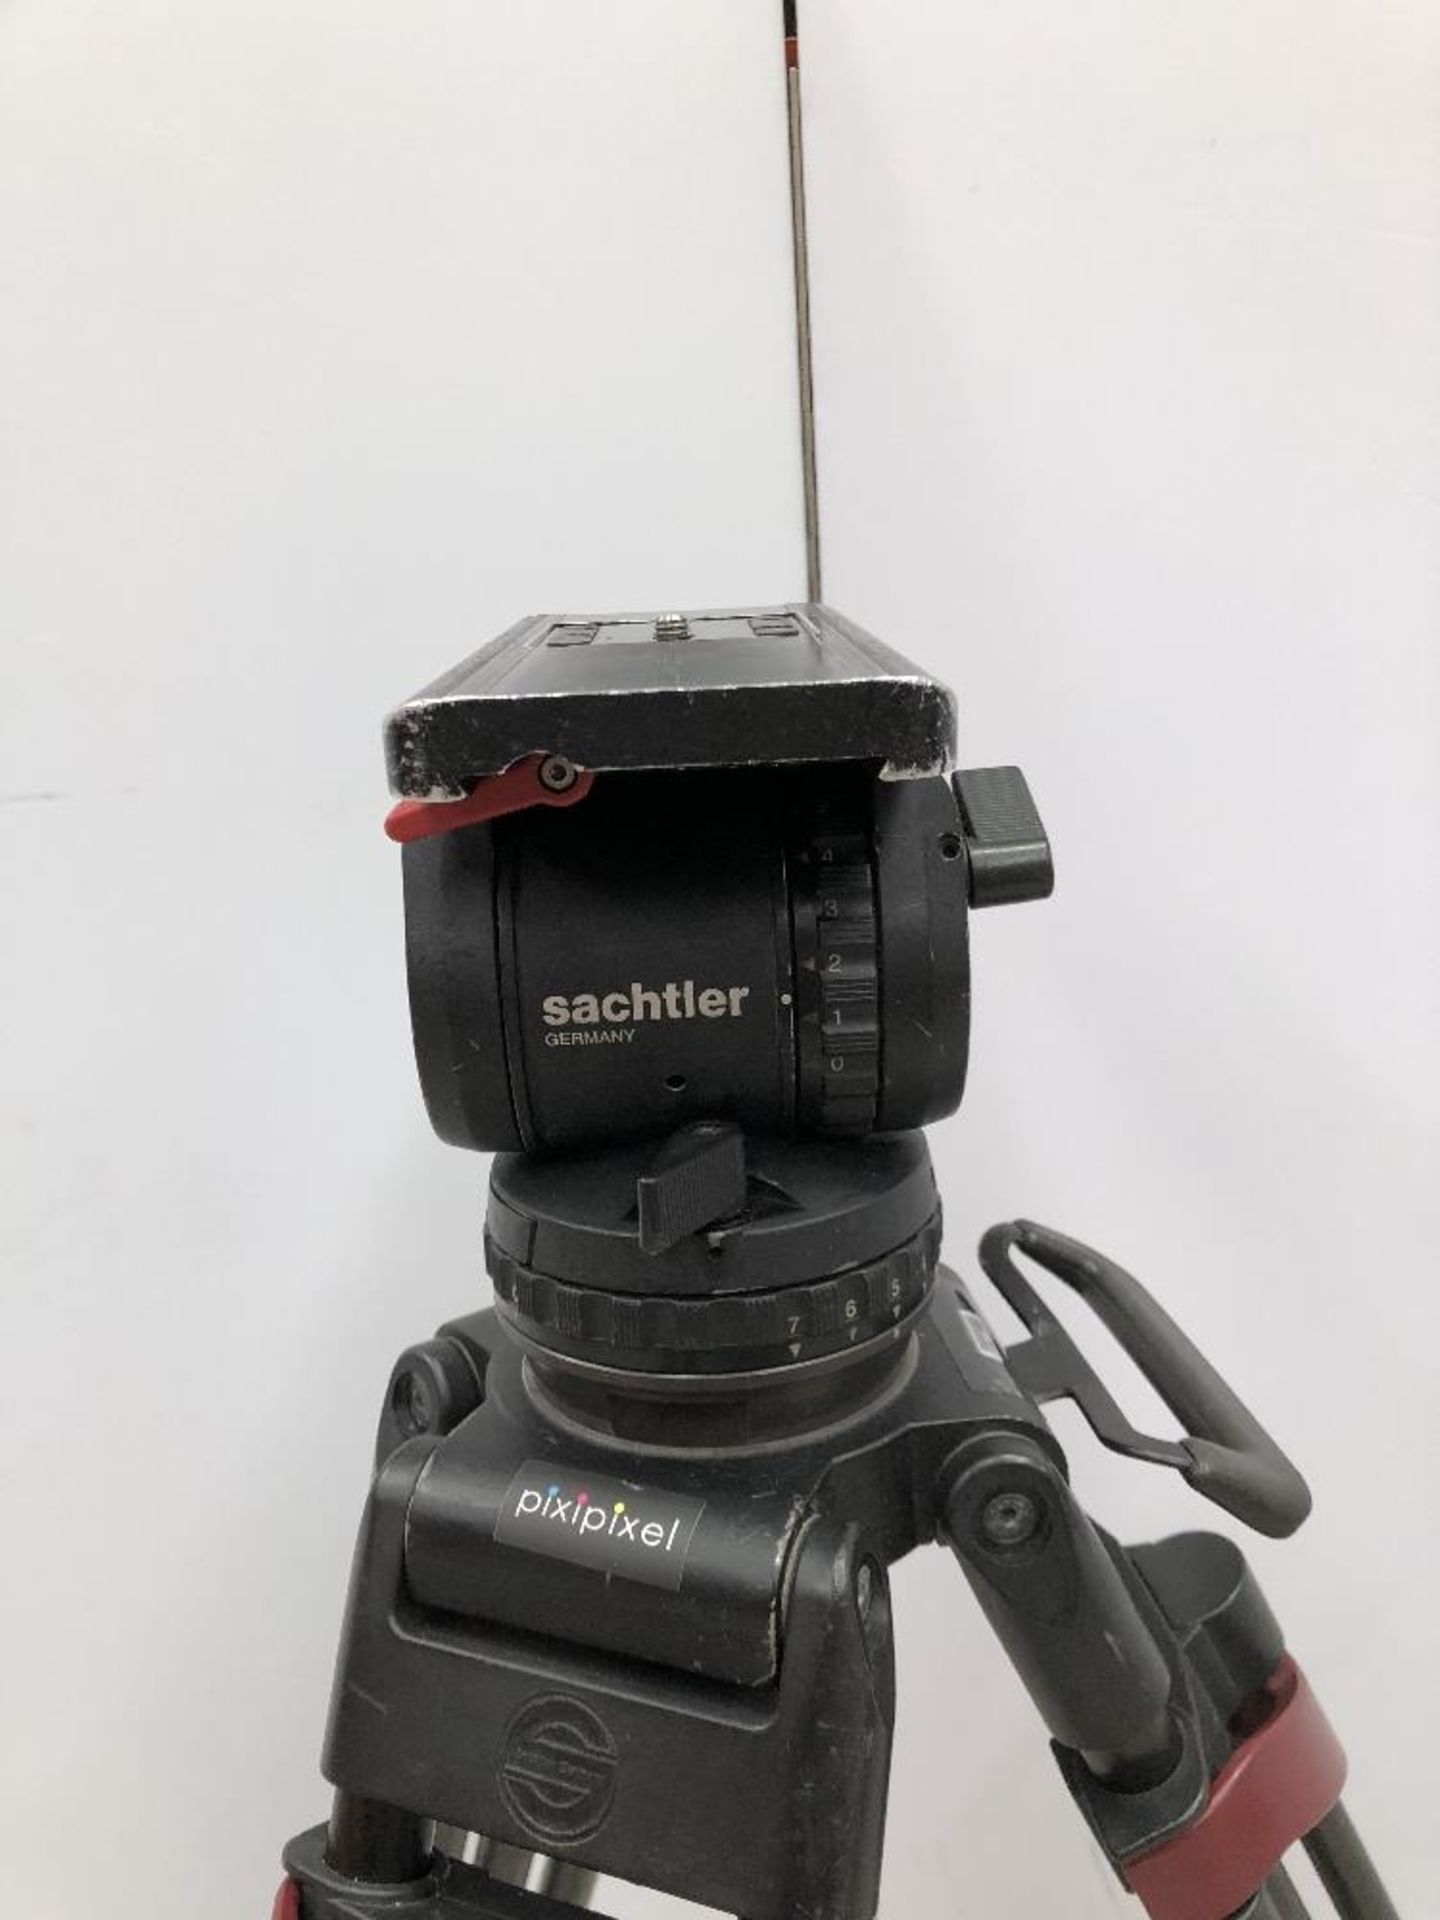 Sachtler V18 S1 Carbon Fibre Medium Camera Tripod With Fluid Head And Sachtler Carry Bag - Image 3 of 6